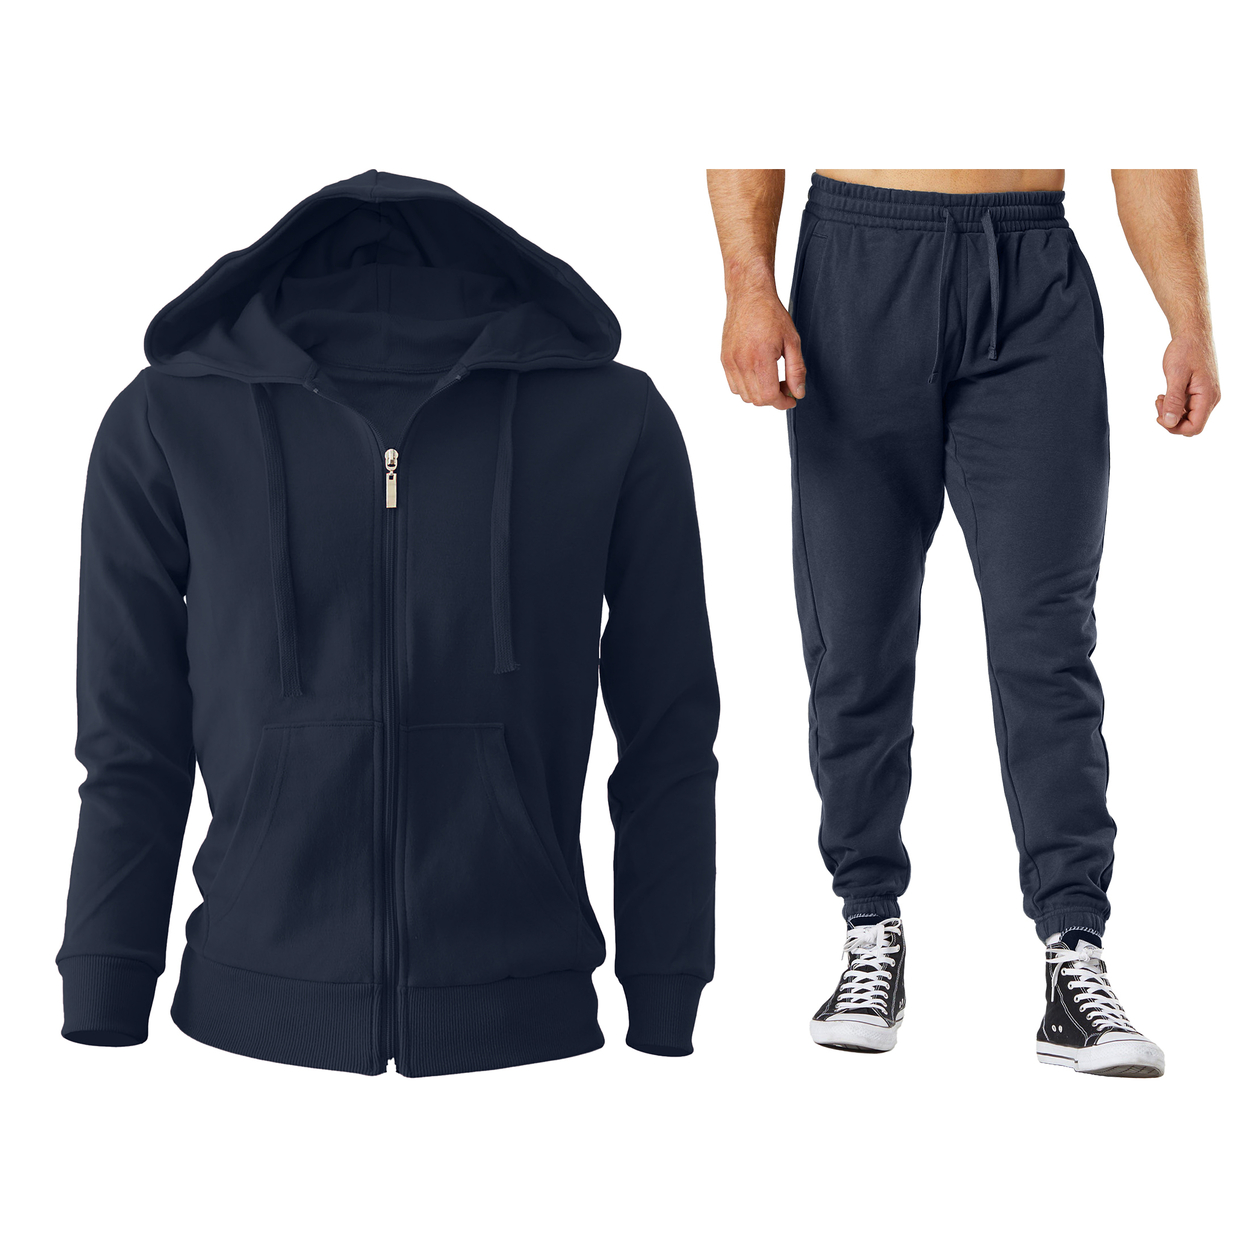 2/4-Piece: Men's Winter Warm Cozy Athletic Multi-Pockets BIG & TALL Sweatsuit Set - Charcoal, 2, X-large